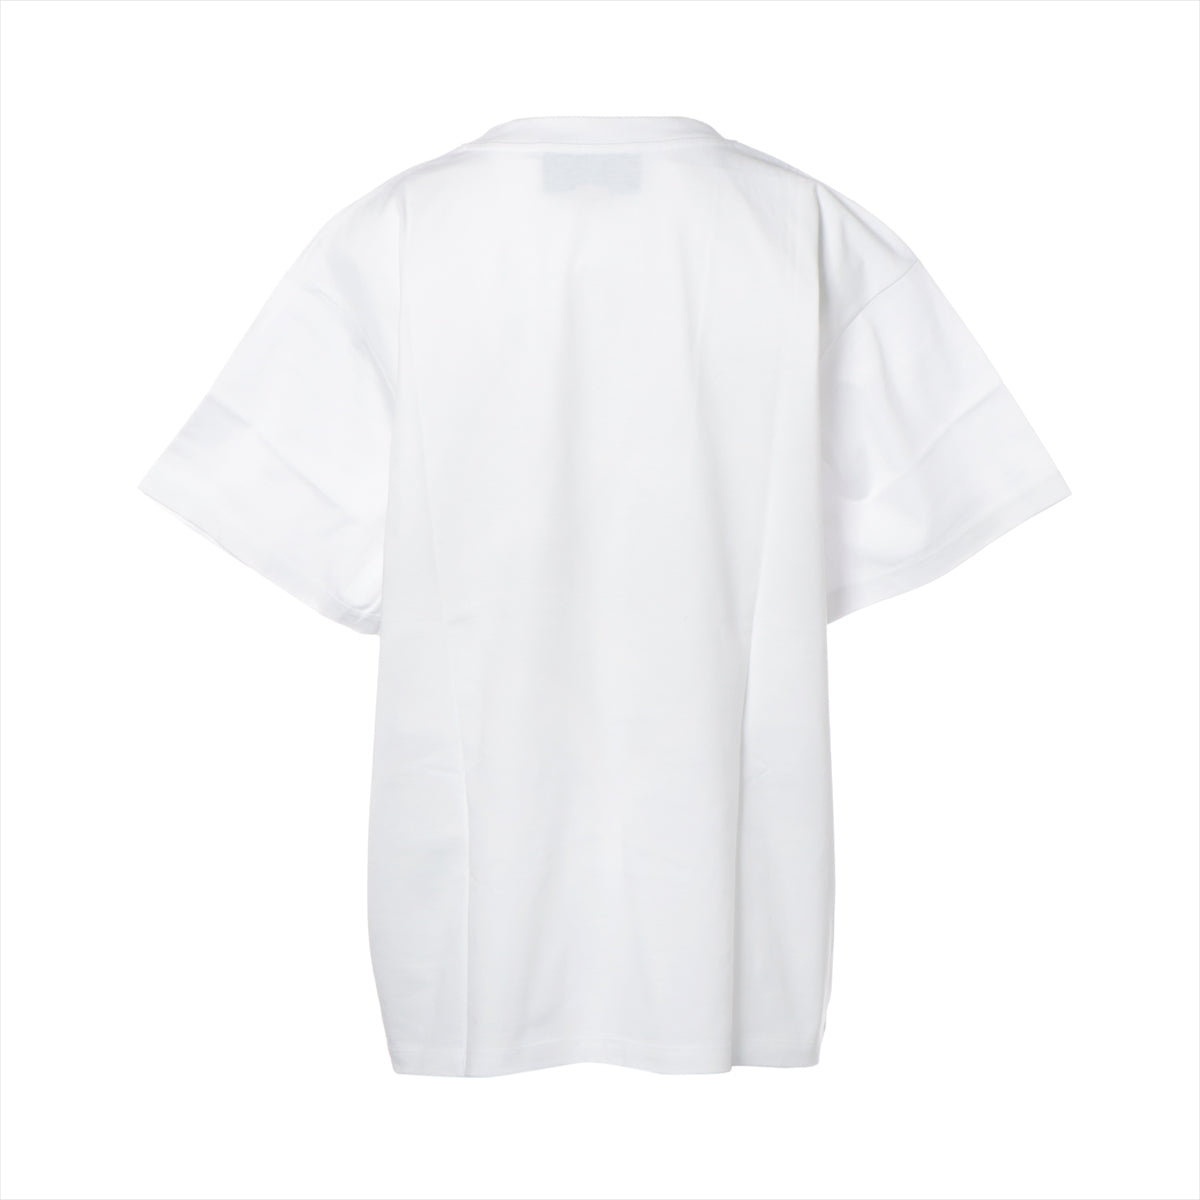 Gucci x Adidas Cotton T-shirt XS Ladies' White  723384